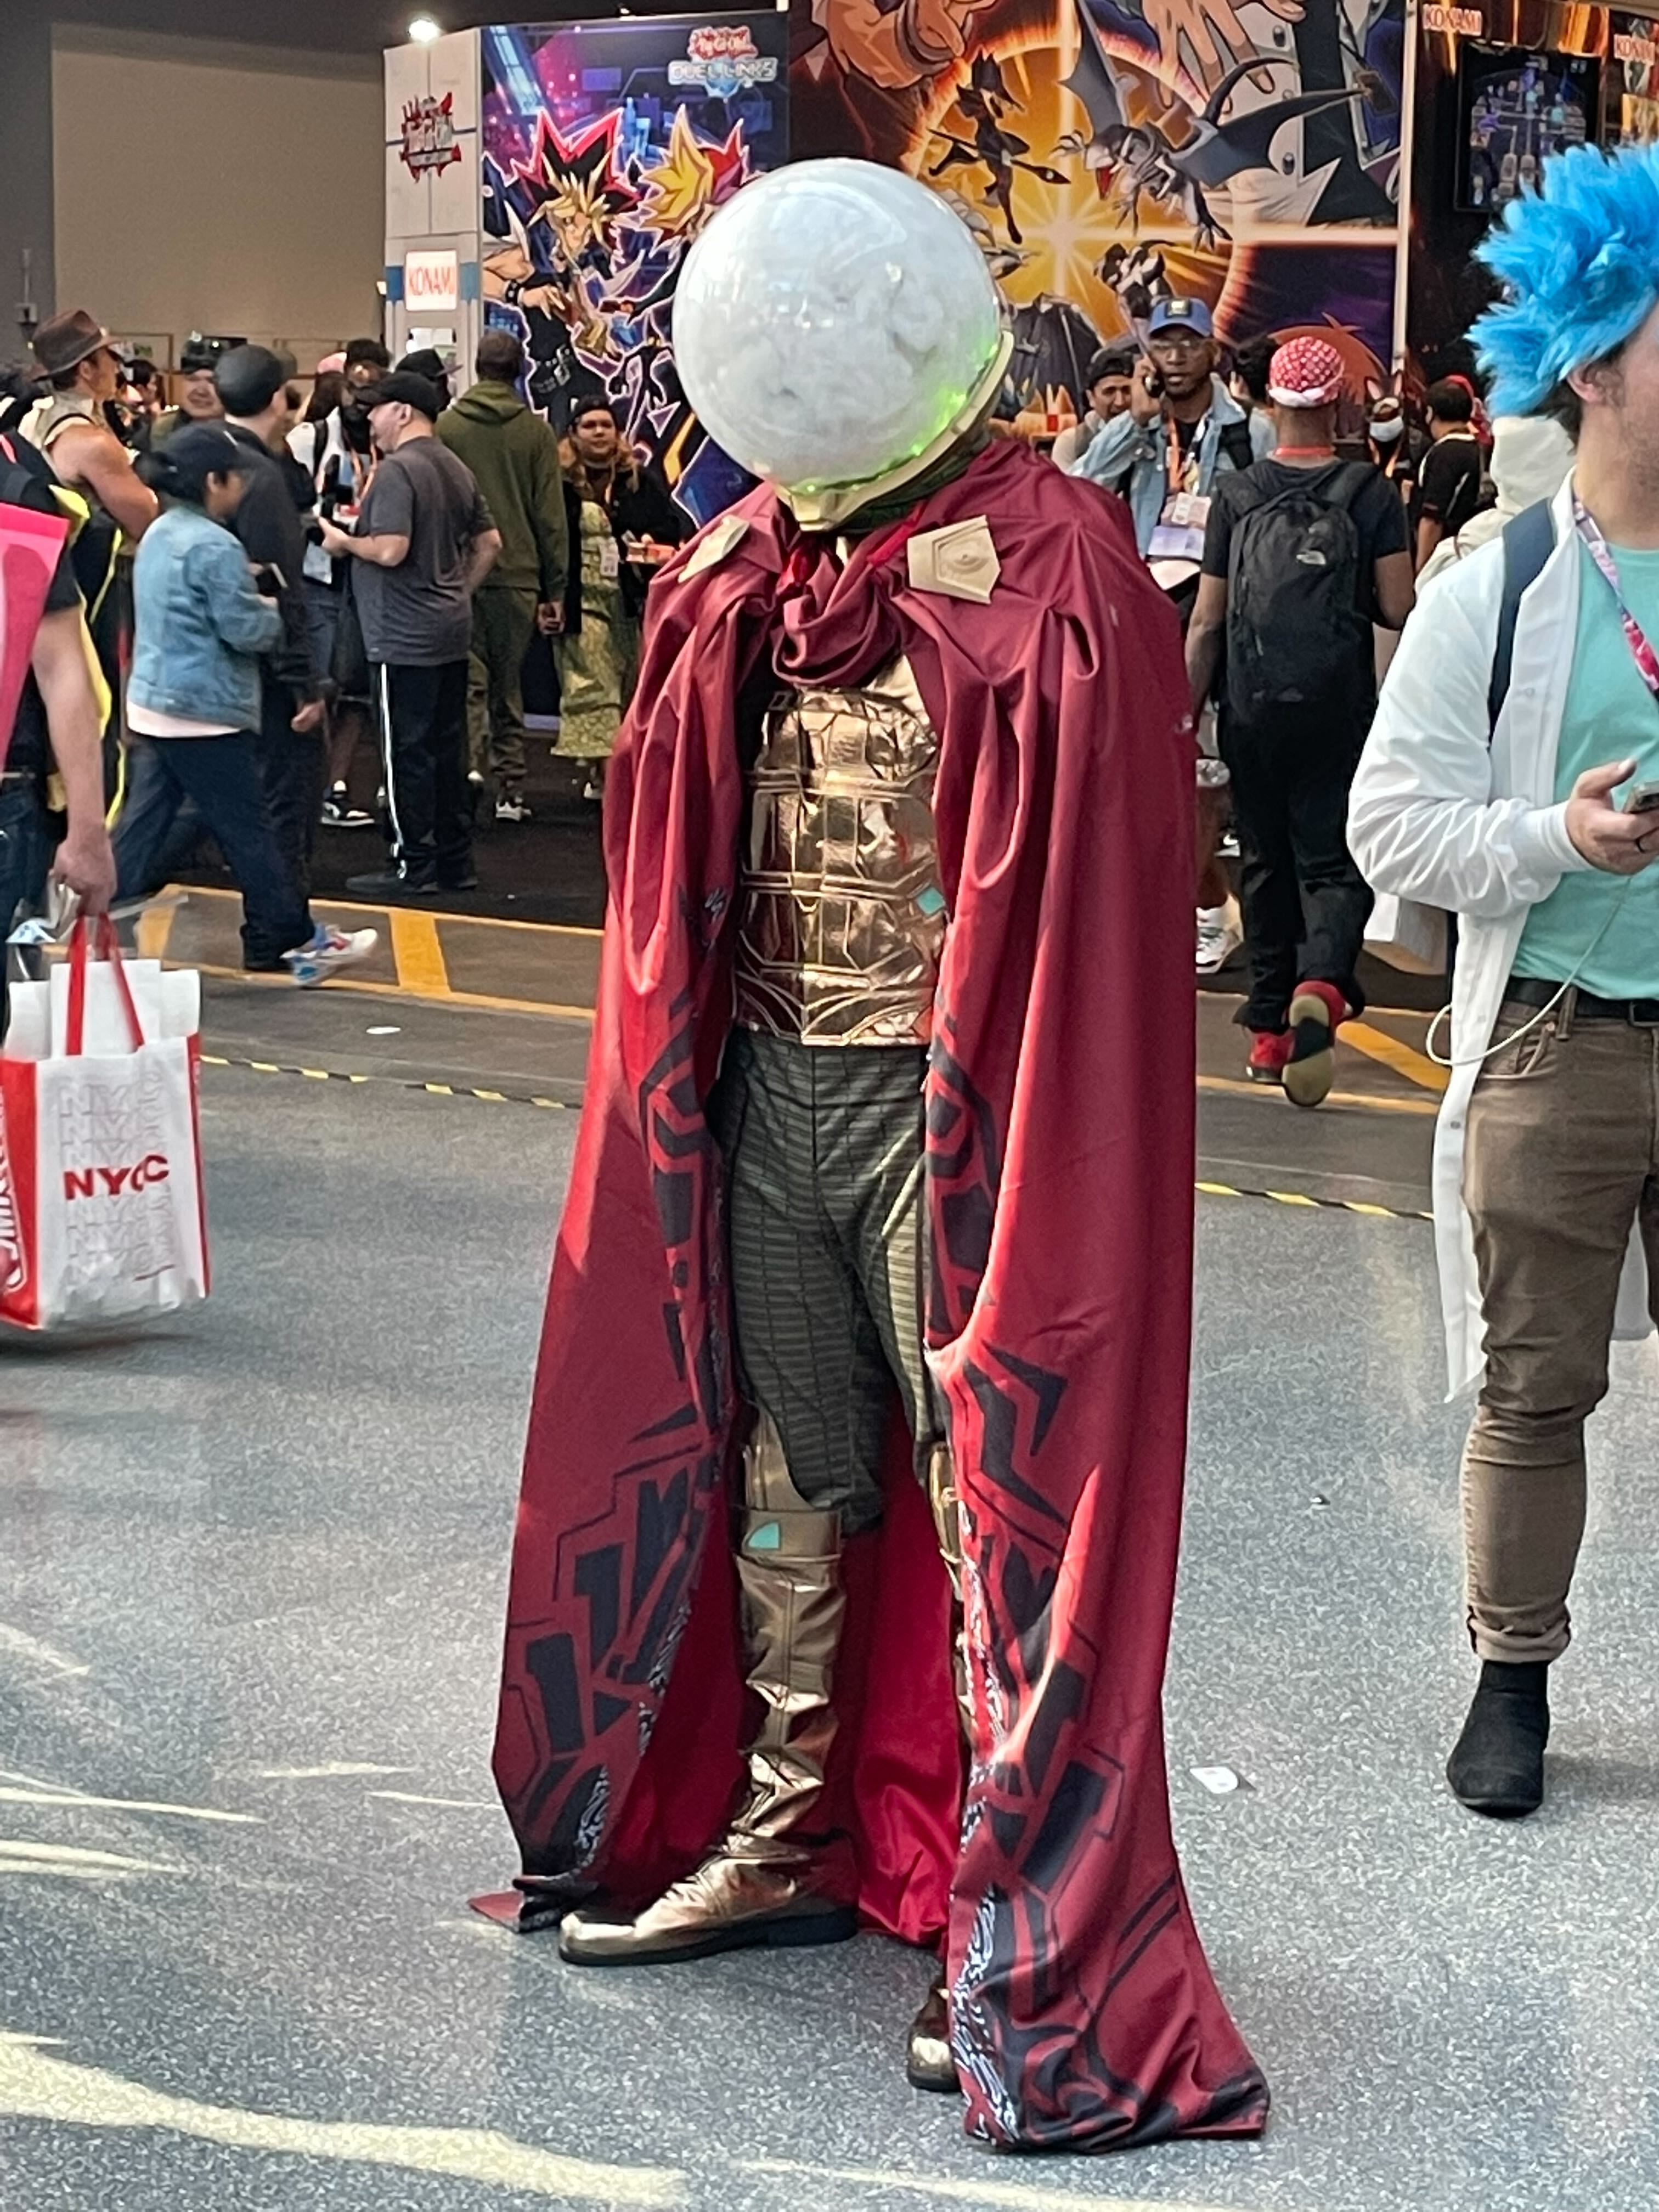 New York Comic Con Cosplay - Mysterio